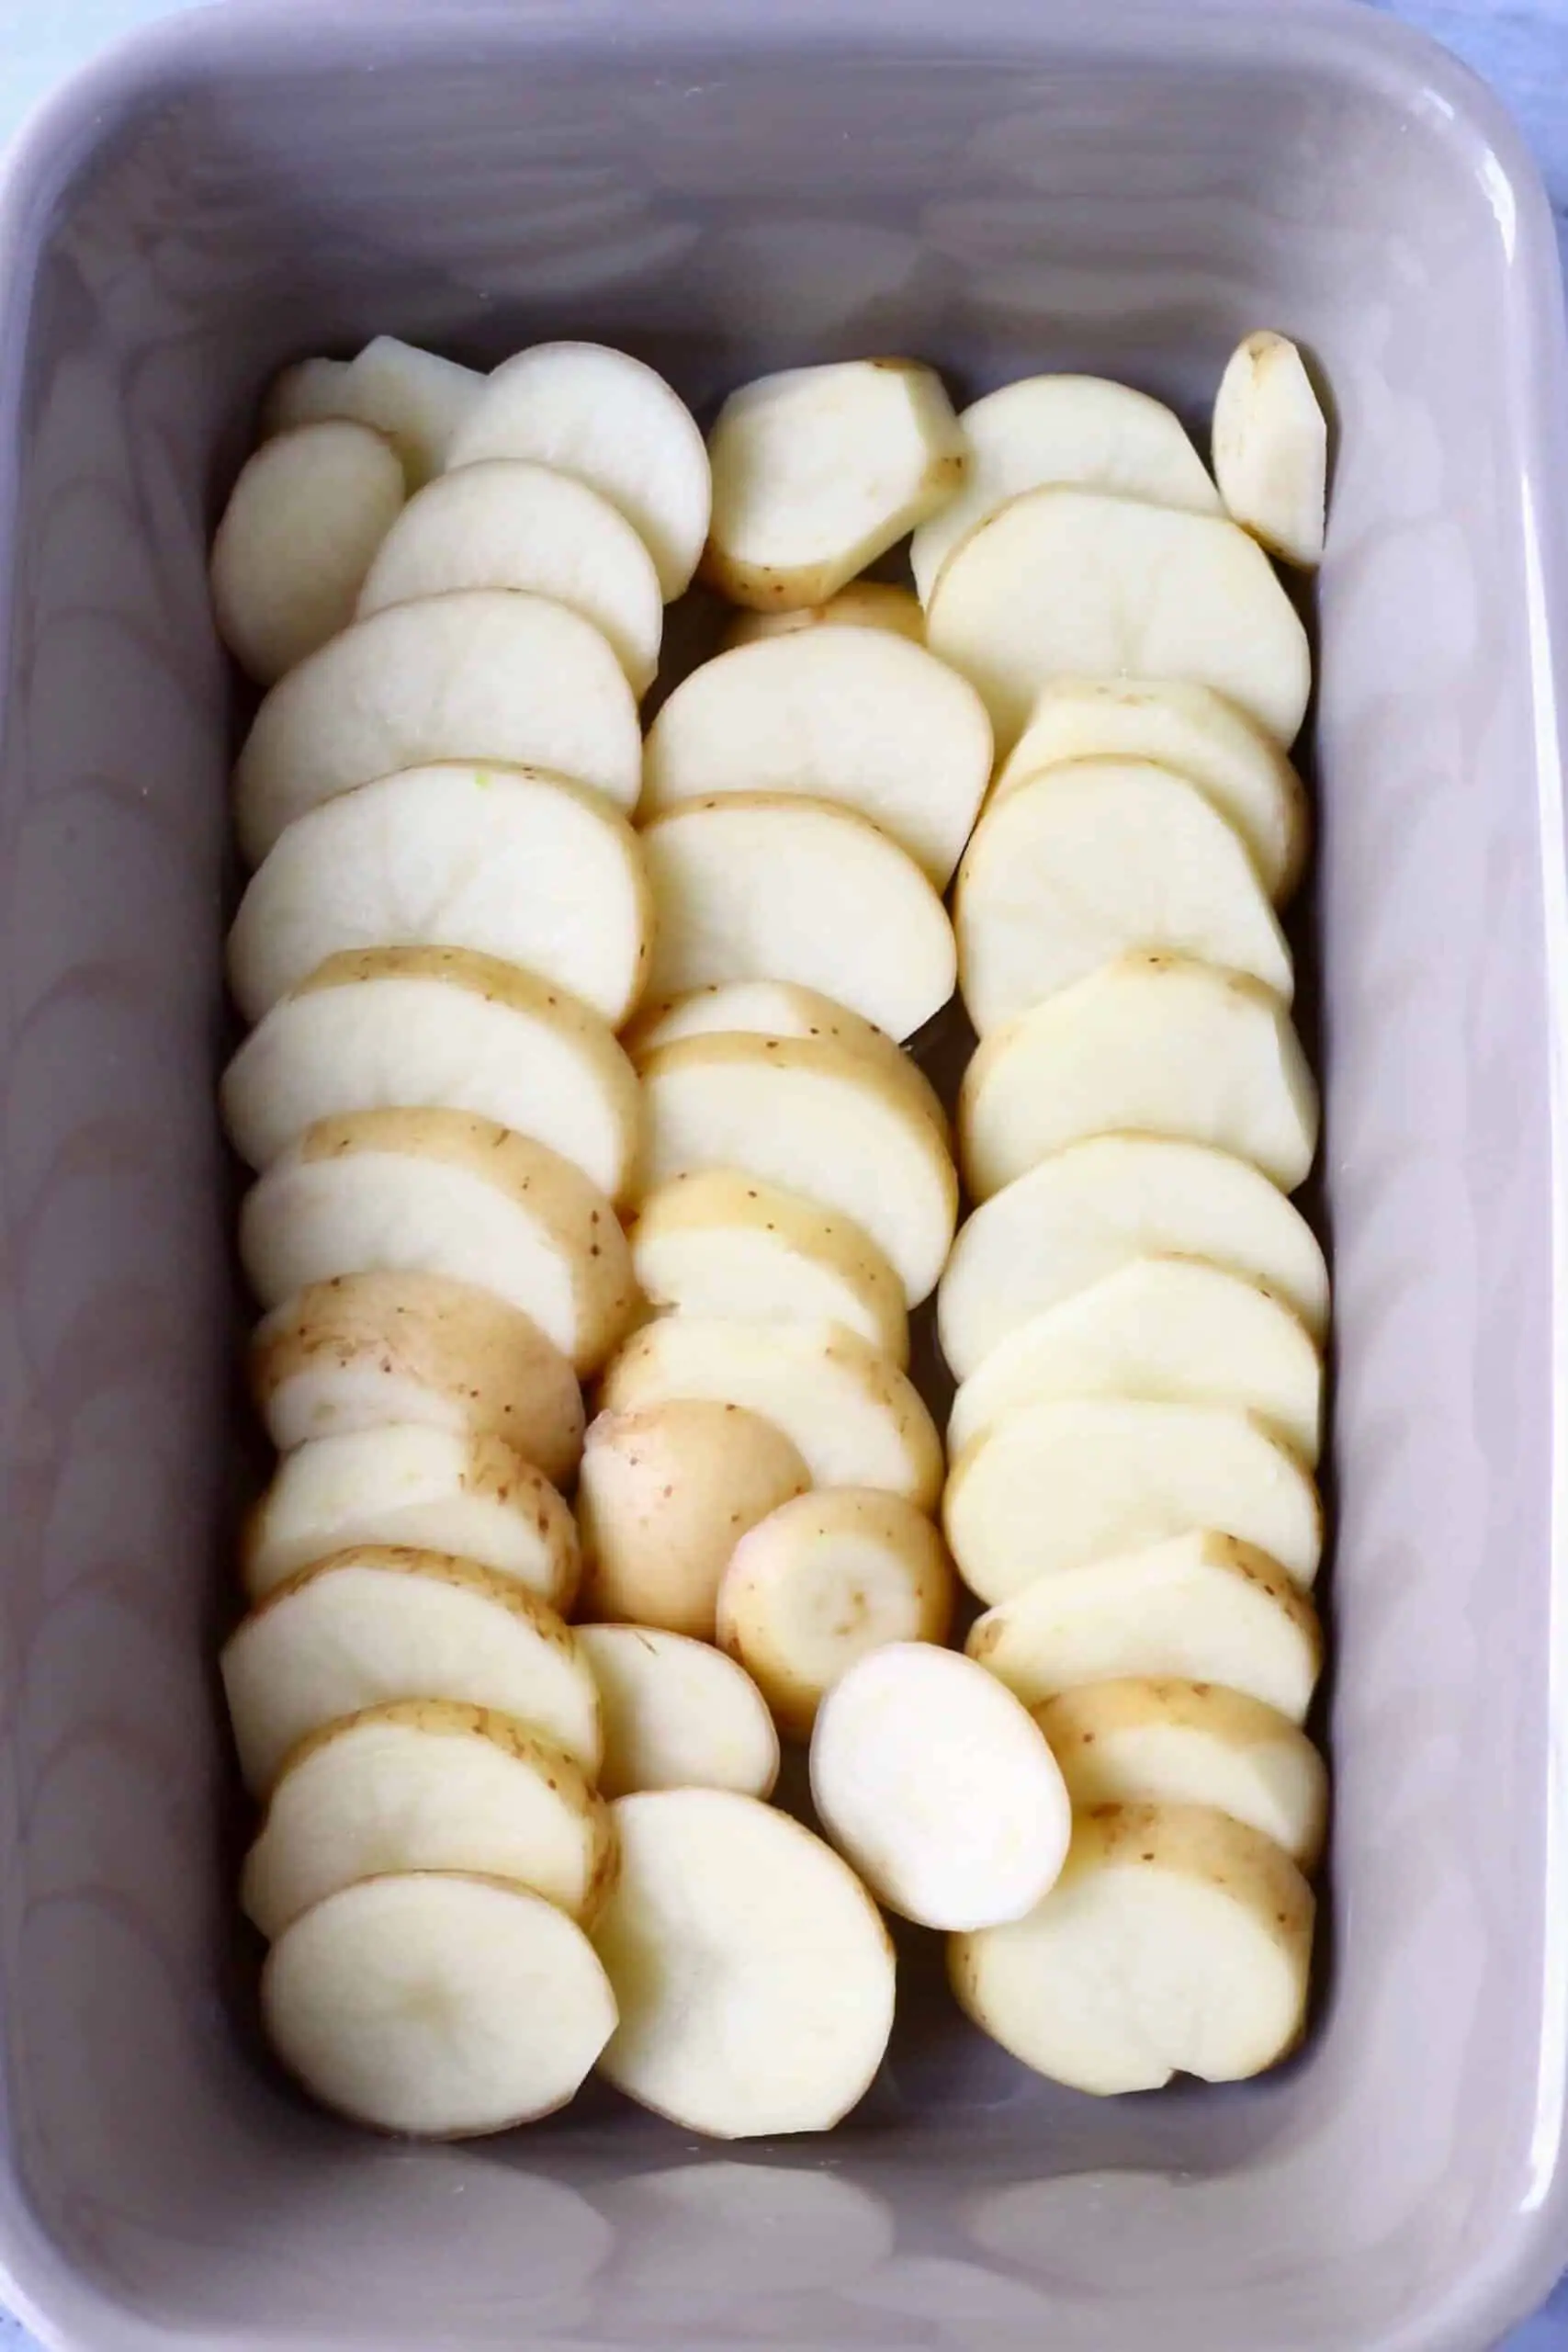 Sliced potatoes in a rectangular baking dish